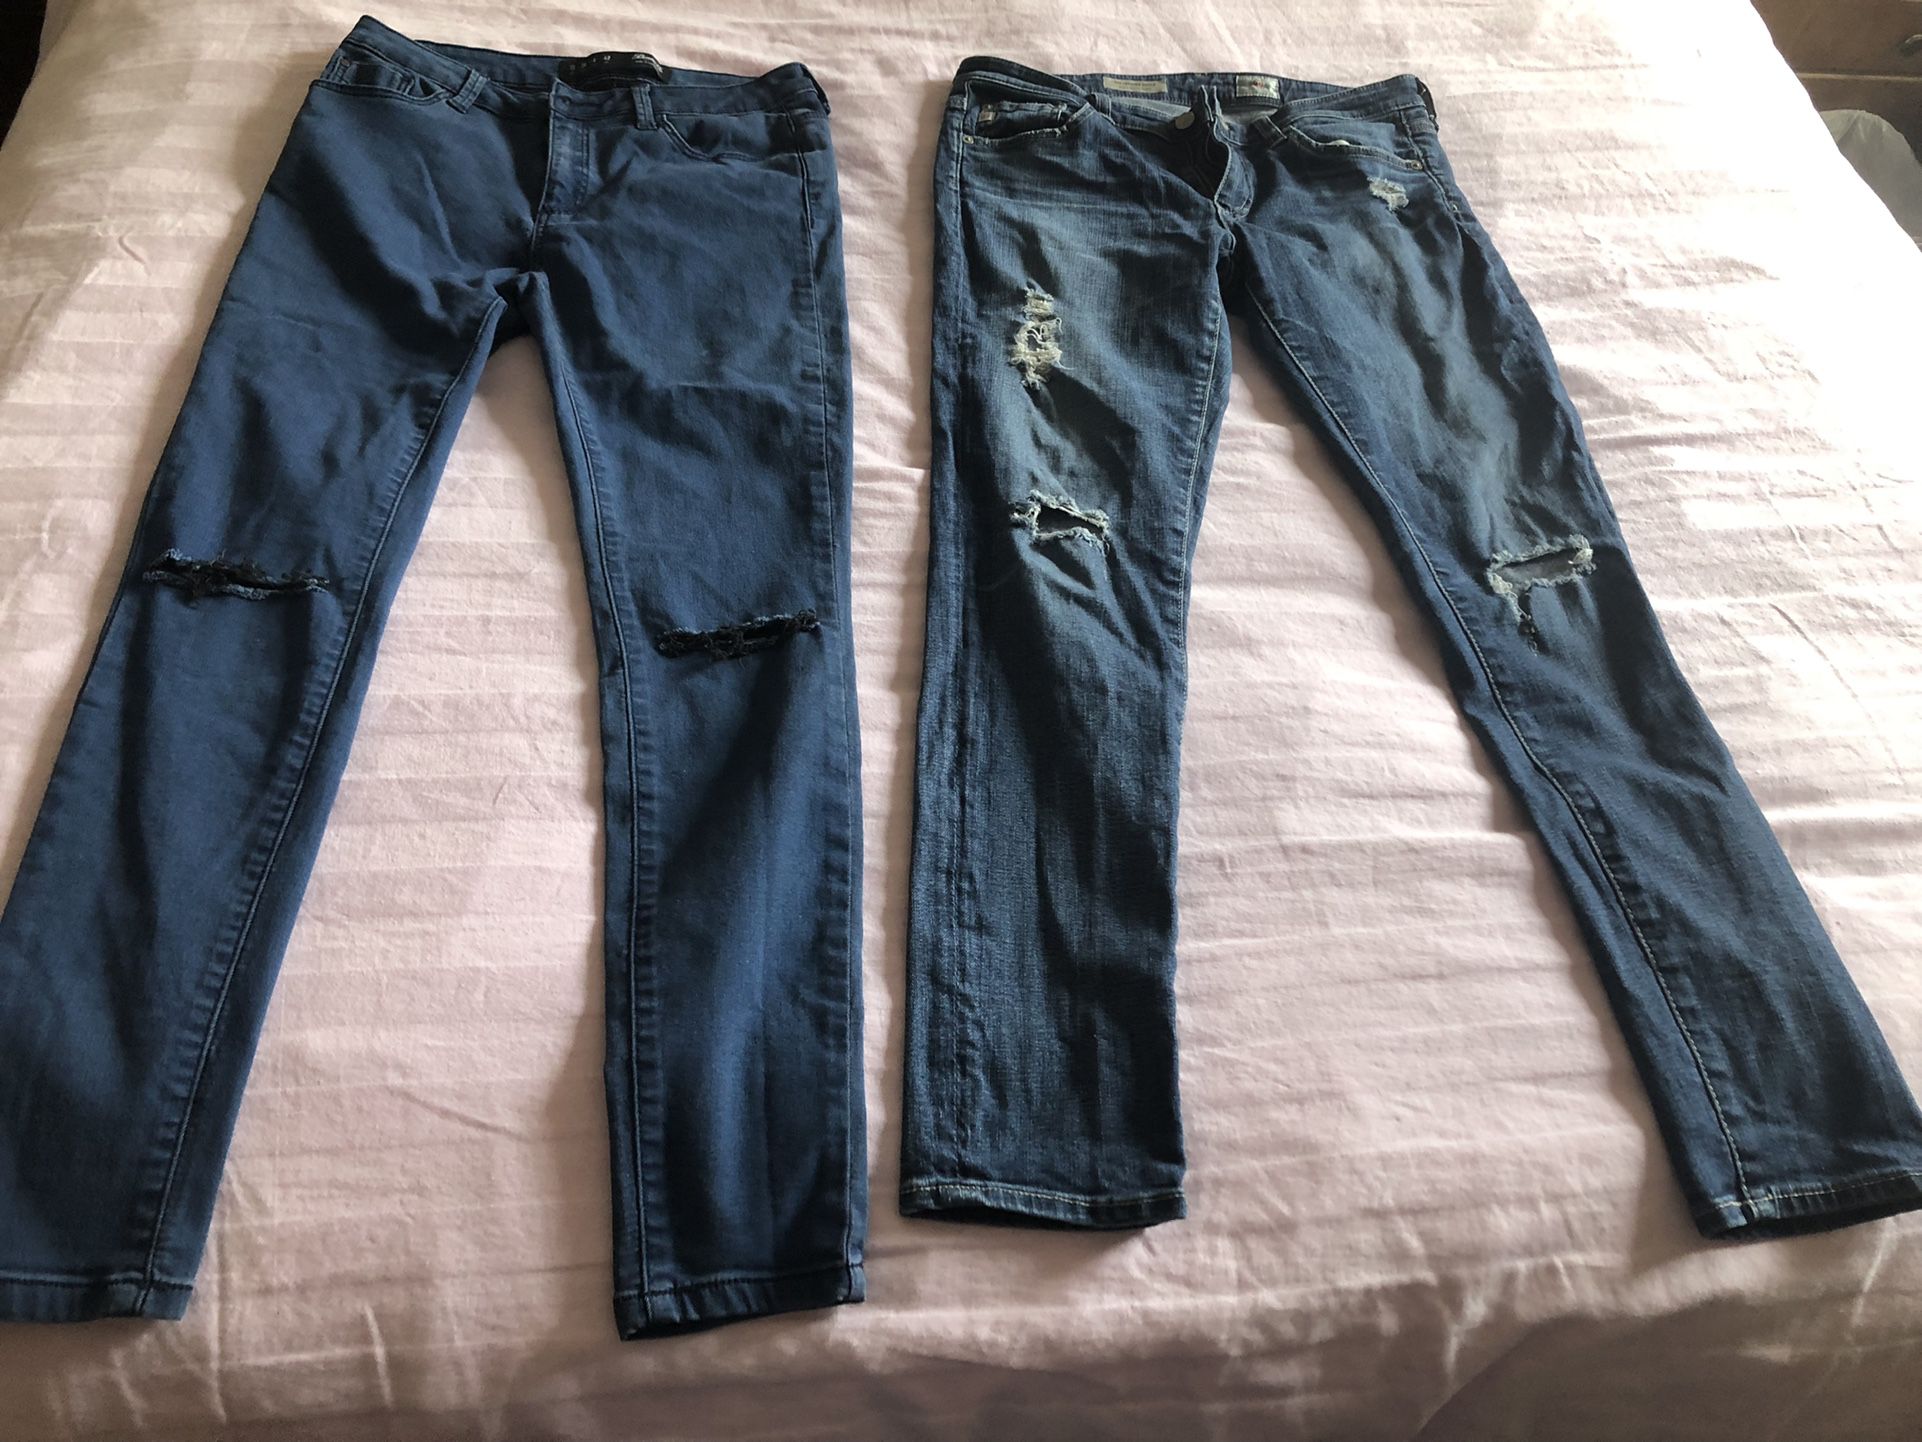 2 jeans, 2 denim shorts and 1 denim skirt, sizes S, M, all for $10!